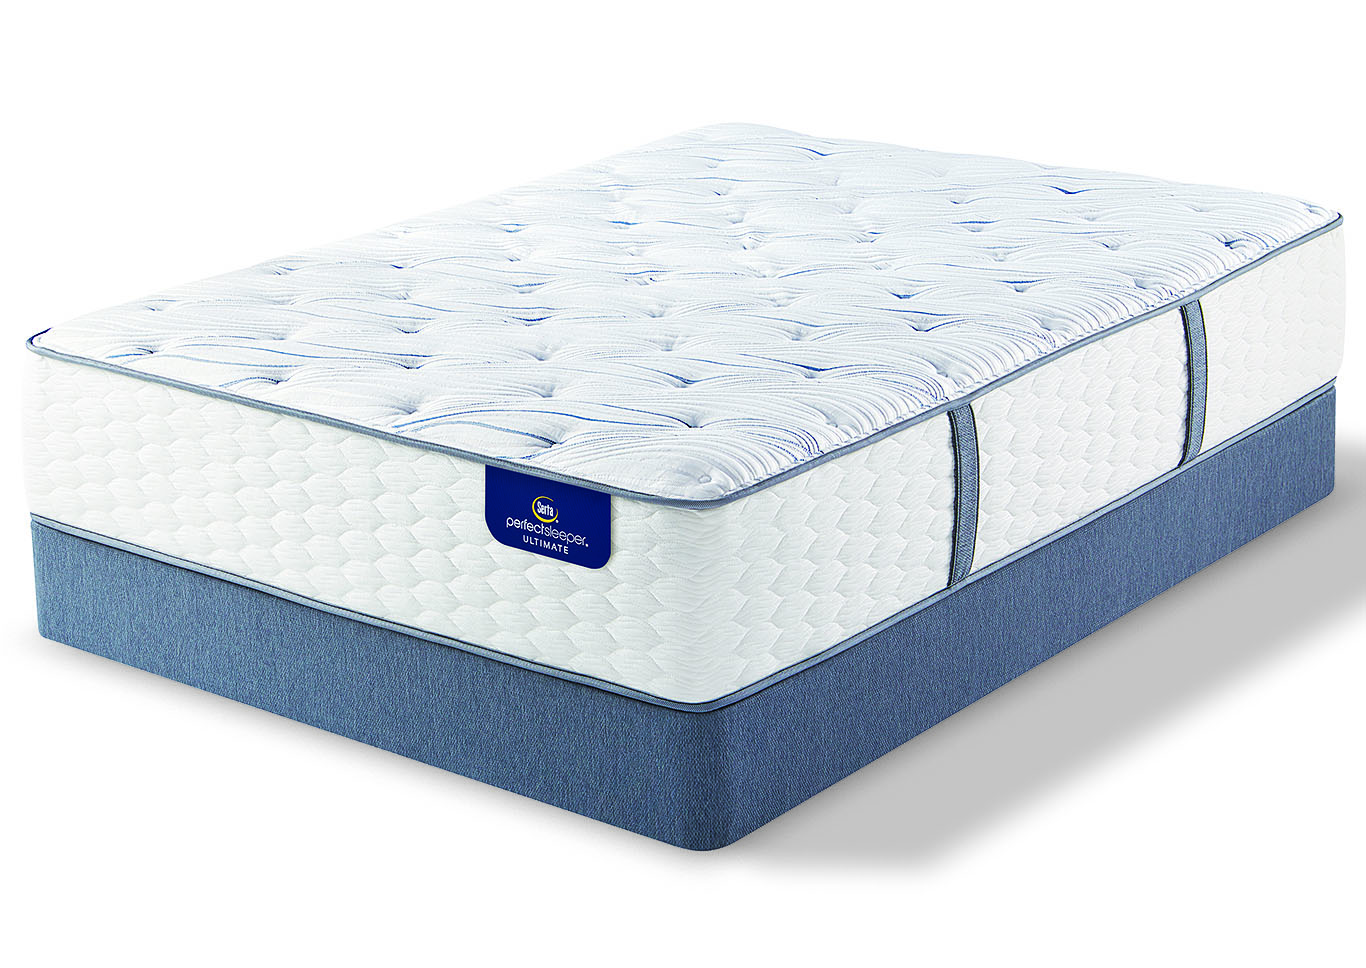 luxury firm mattress twin